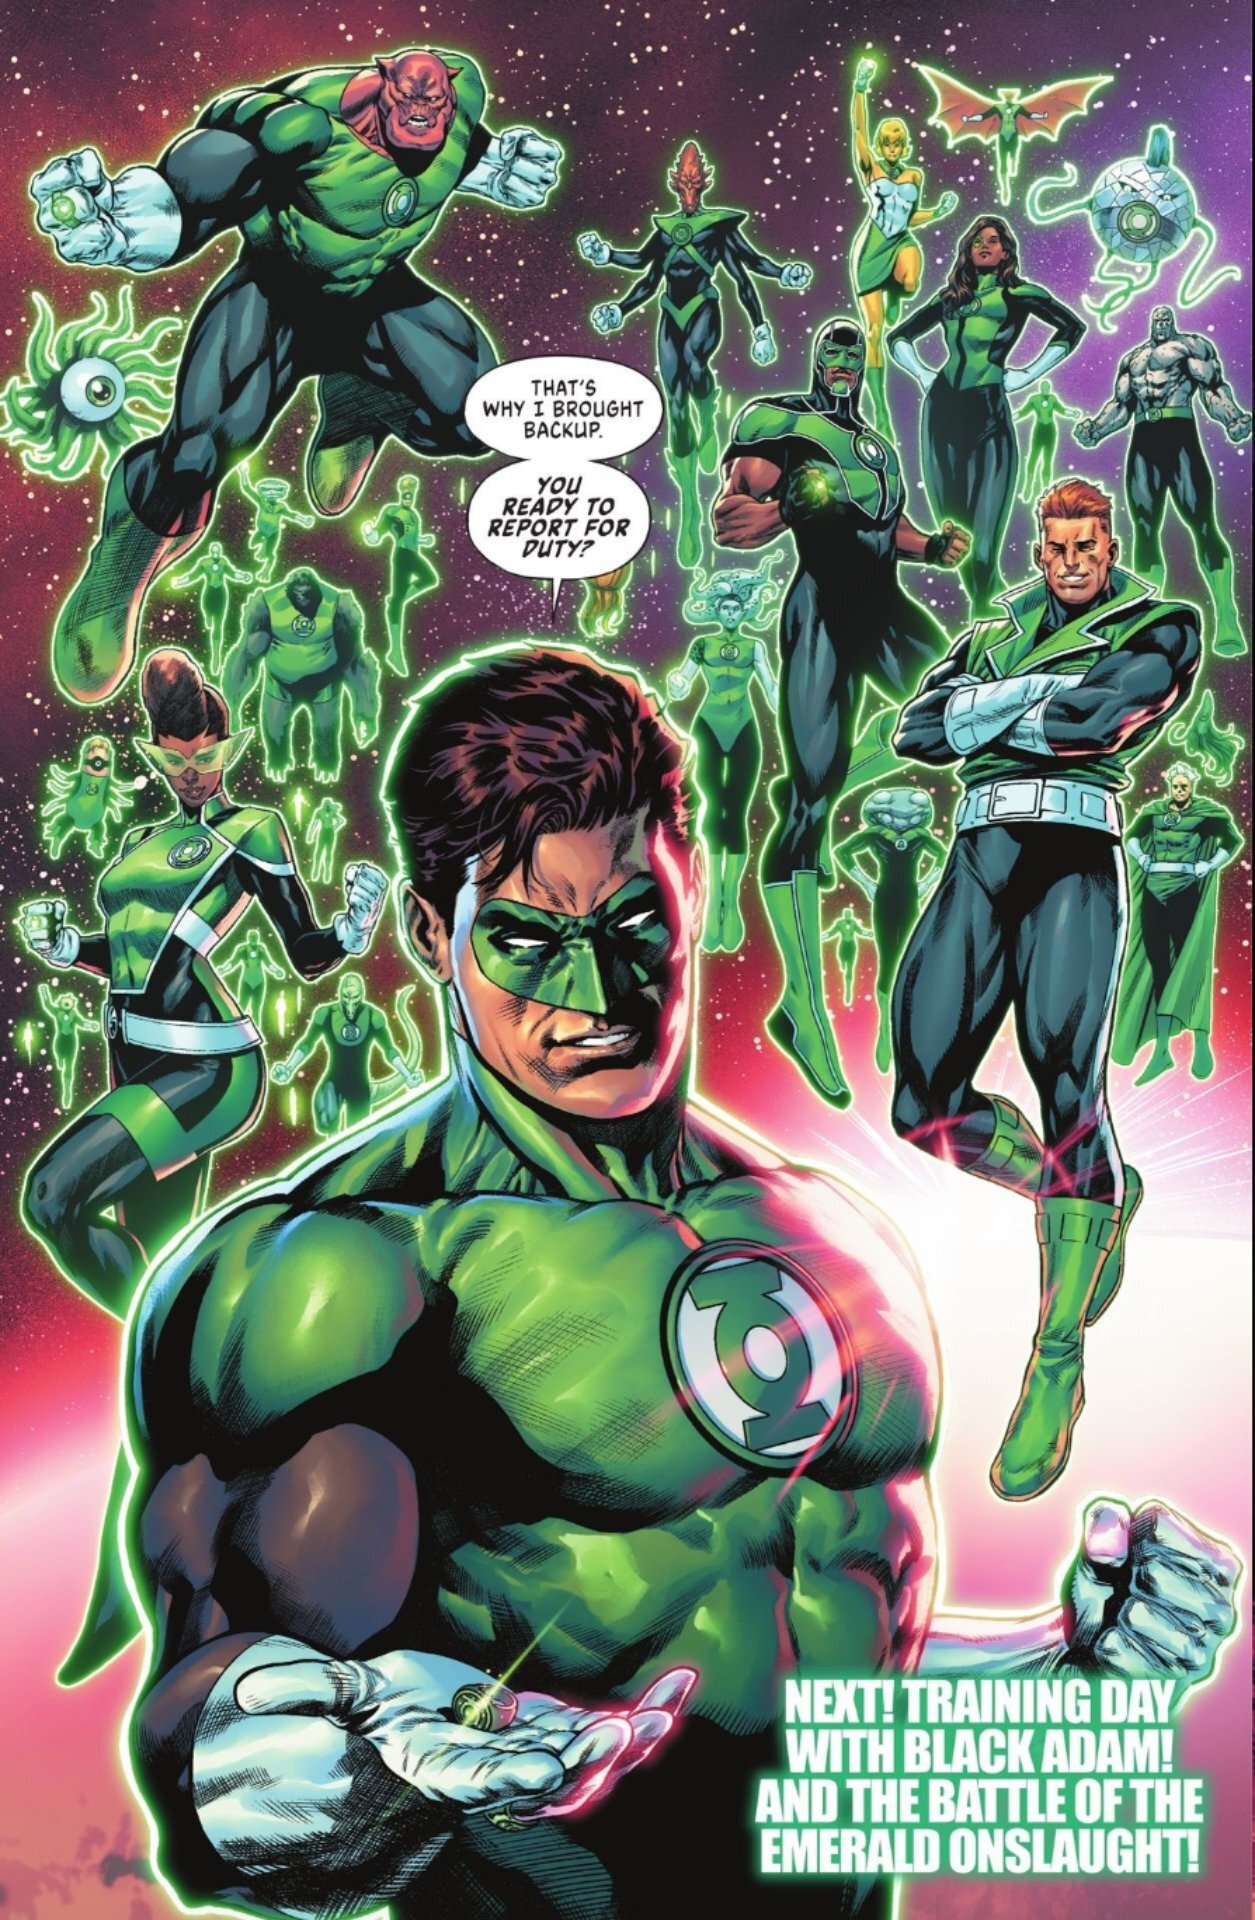 The Green Lanterns appear in Dark Crisis #2